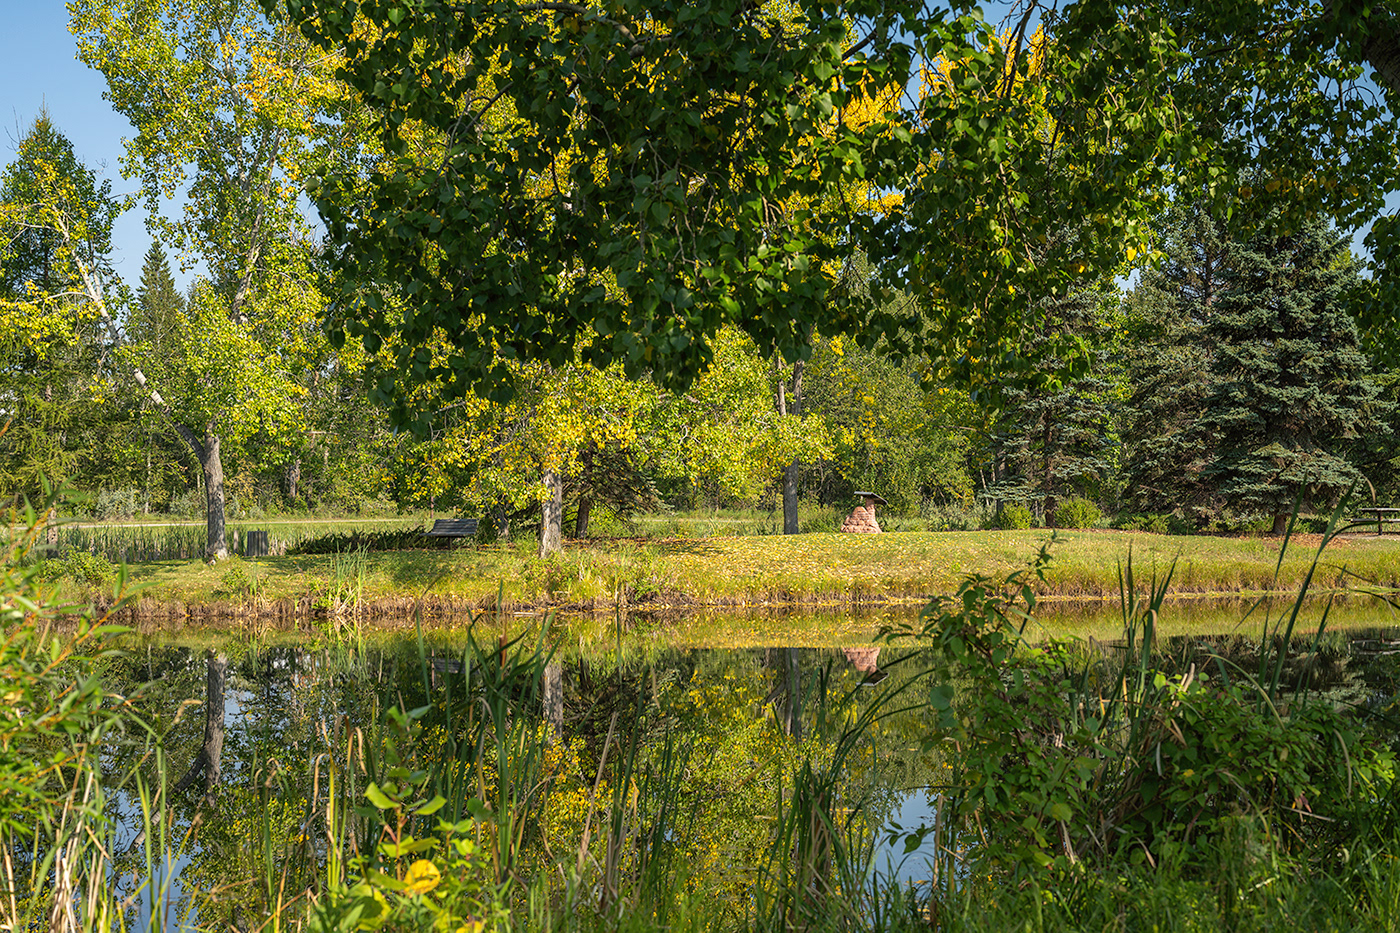 Red Deer alberta Fall autumn Landscape Photography  Bower Ponds